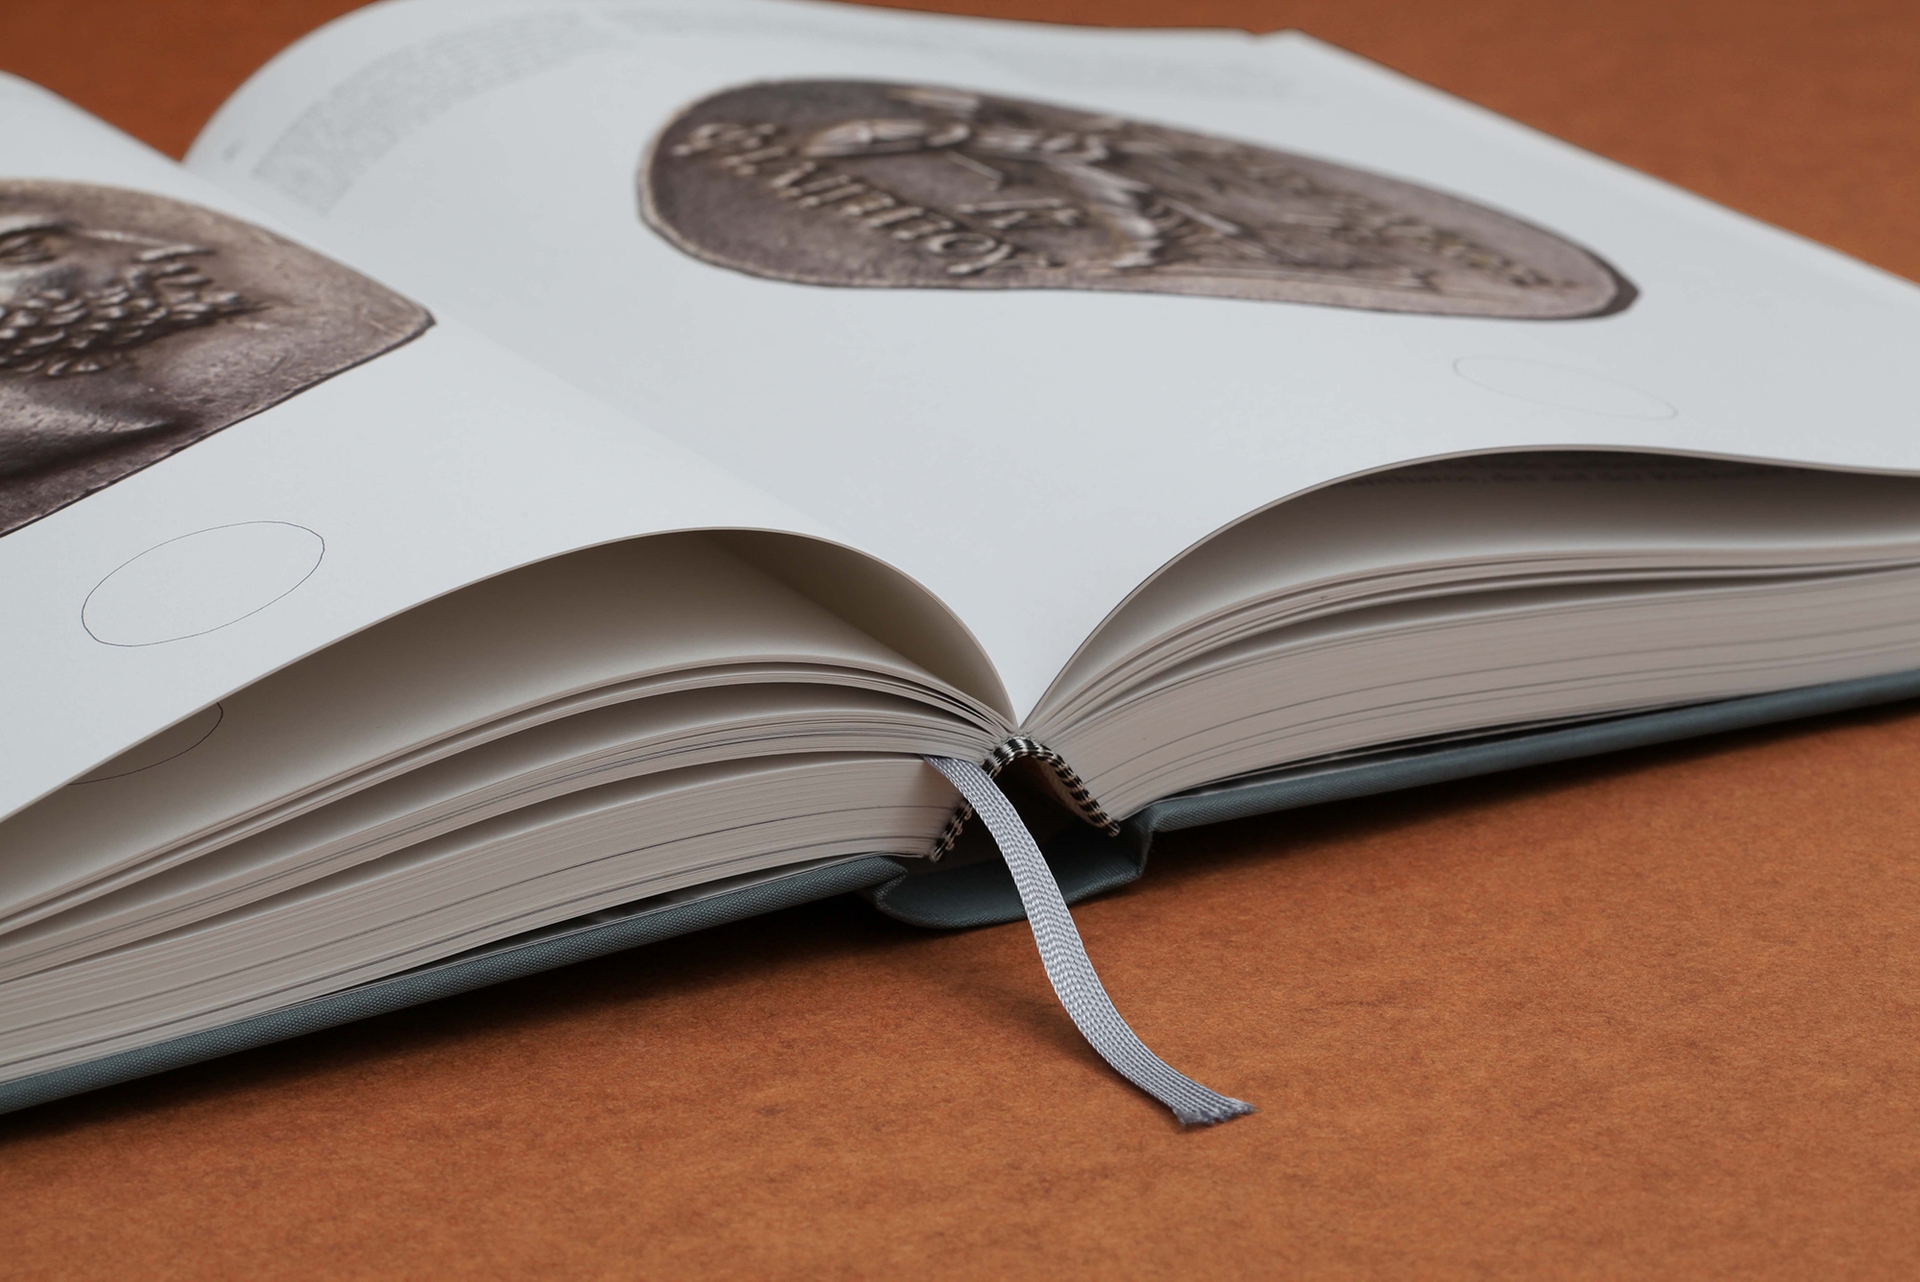 6-bob-design-saager-coin-book-detail-binding-15394.jpg